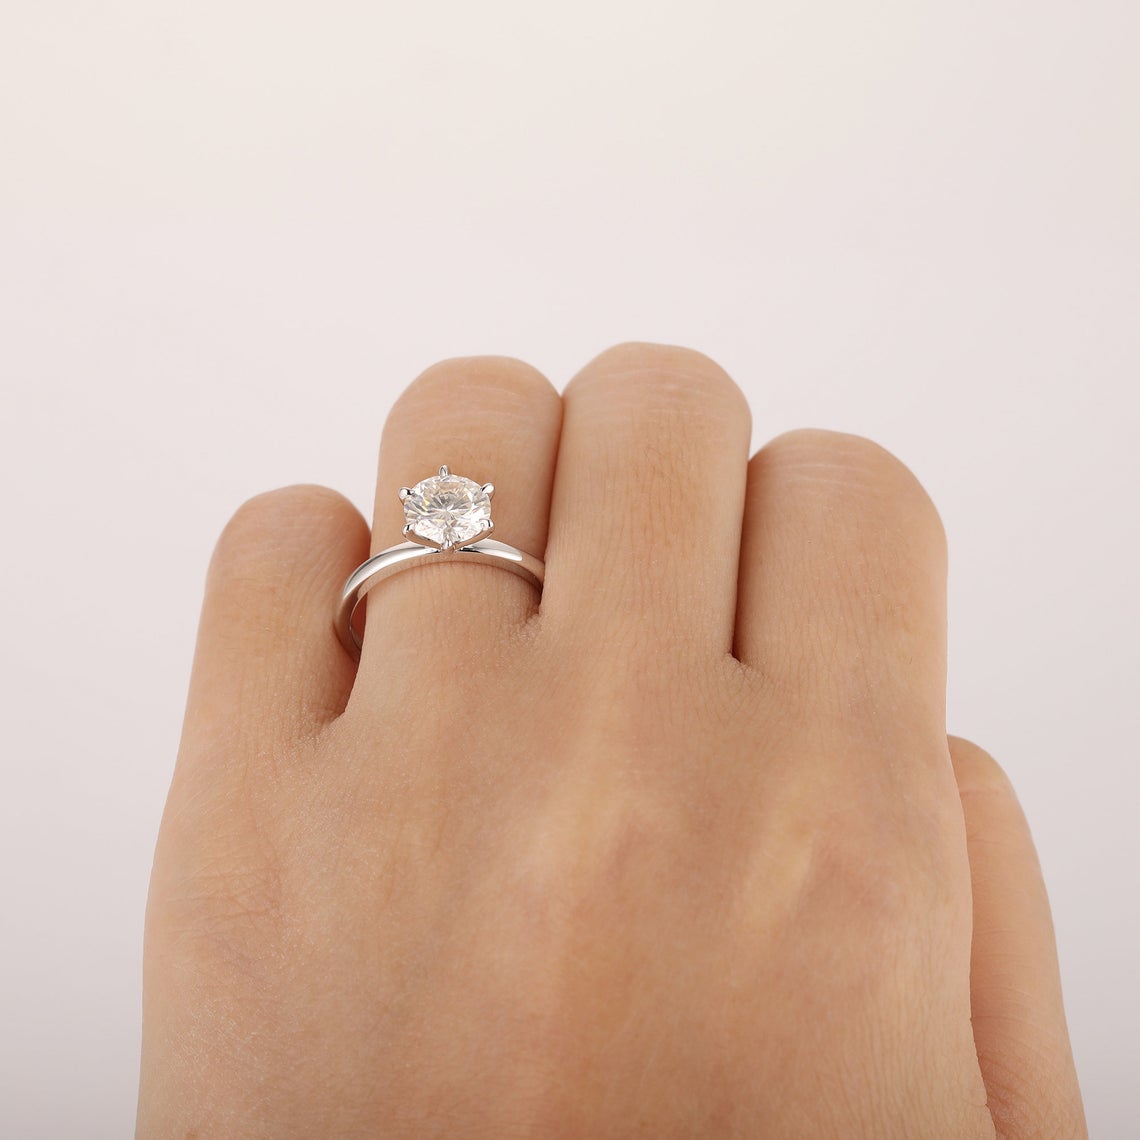 Solitaire Moissanite Engagement Ring, Round Cut 7.0mm Moissanite Prong Set Ring, 14k White Gold Wedding Ring